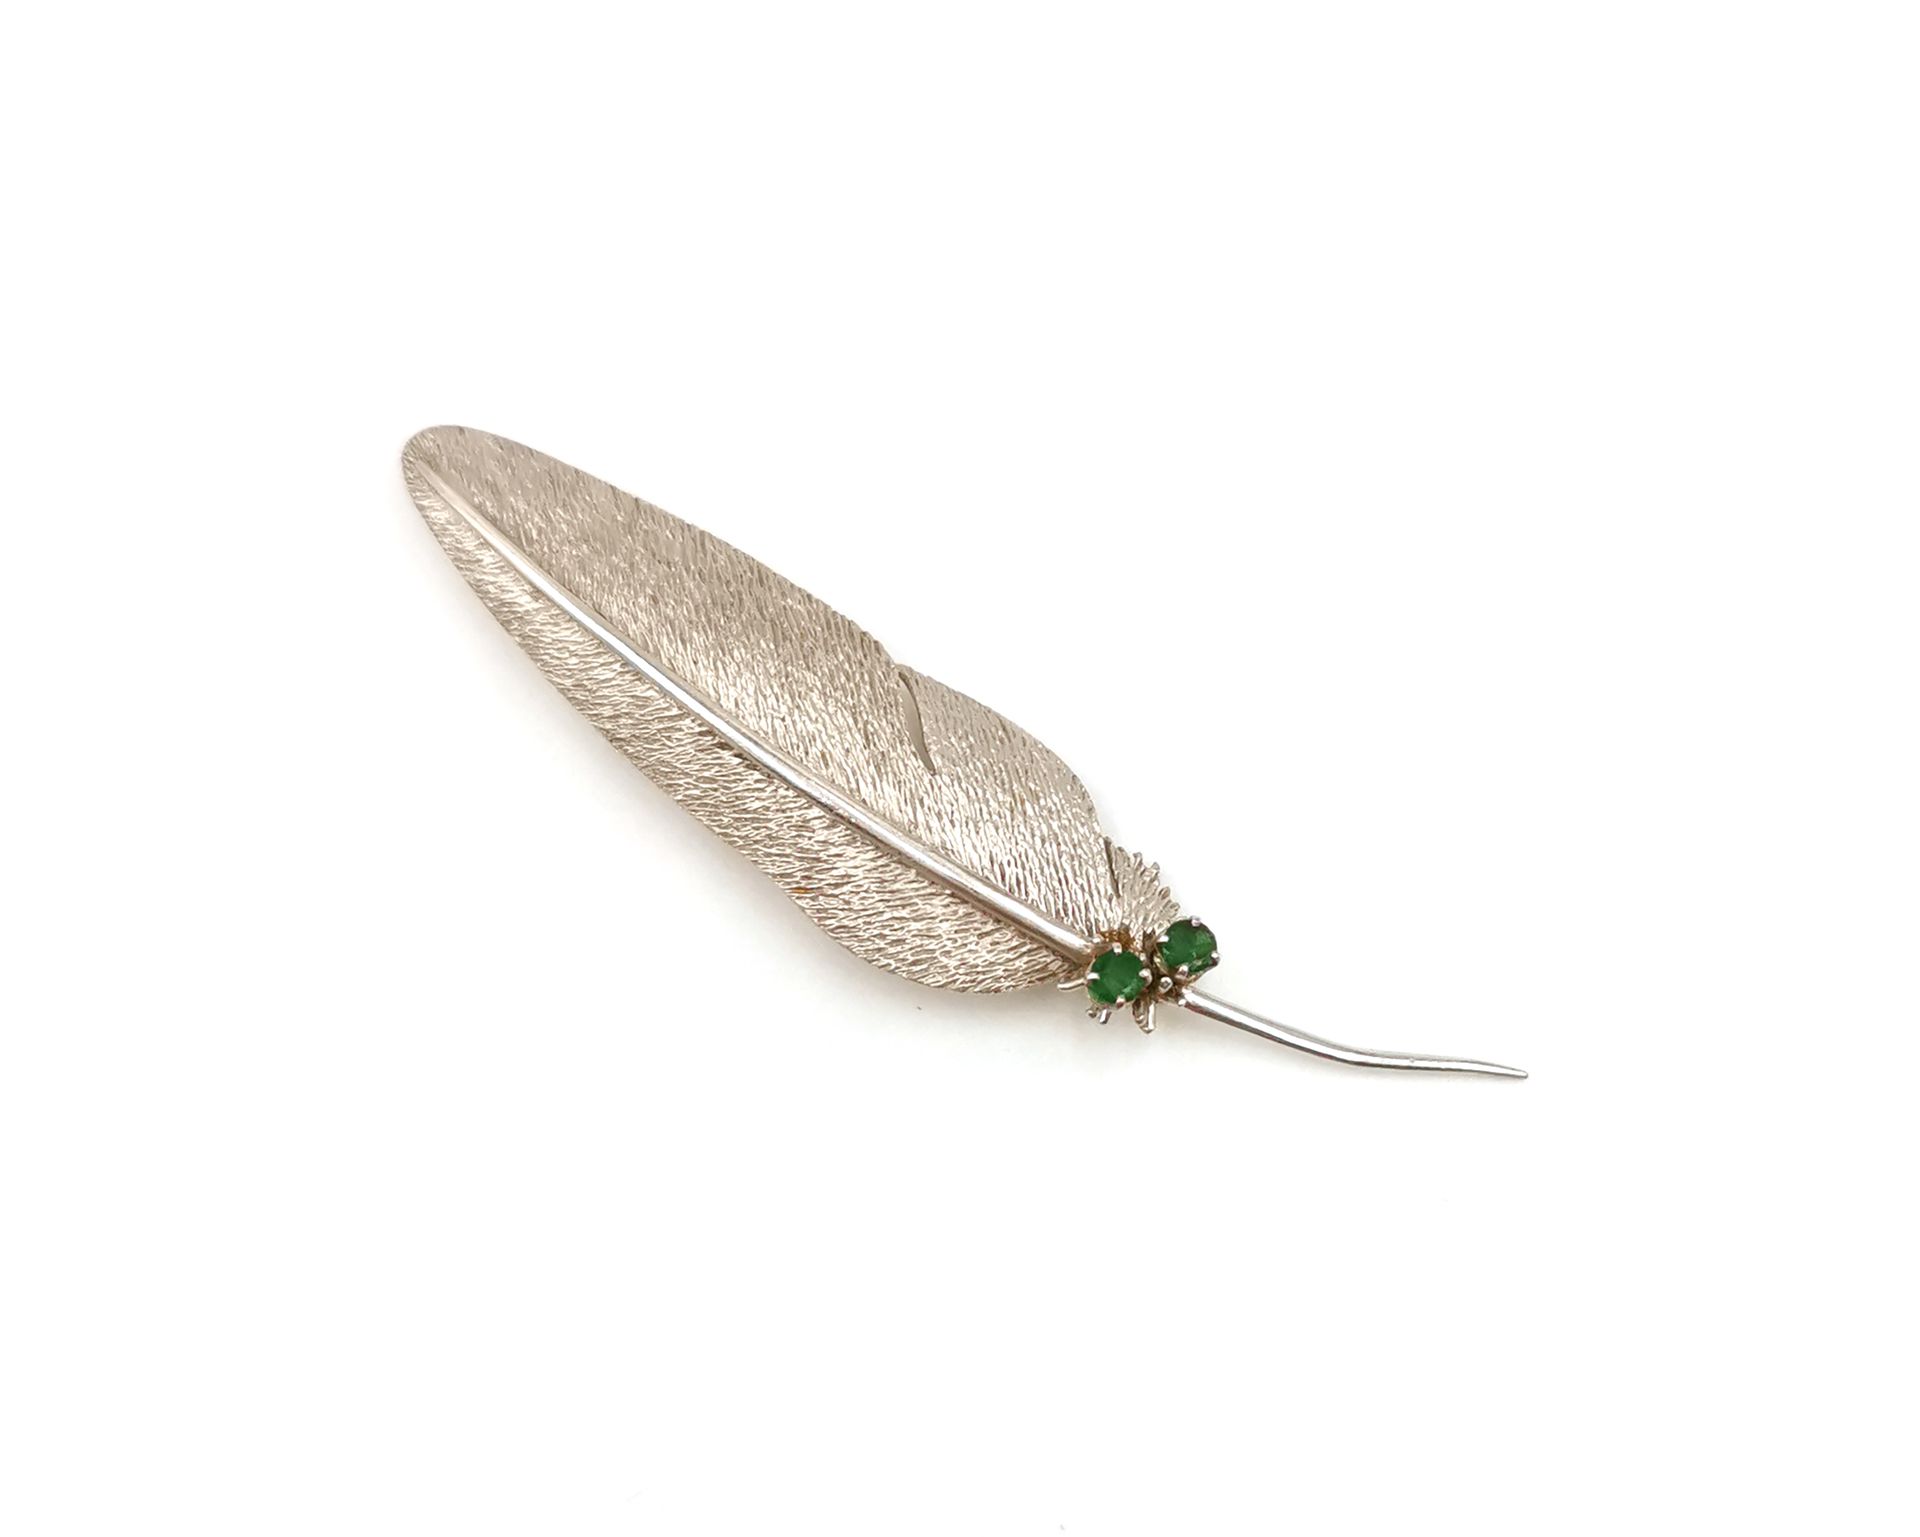 Null 18K（750千分之一）白金胸针，羽毛设计，镶嵌两颗绿色宝石

长度： 8 cm

毛重：10,1克。